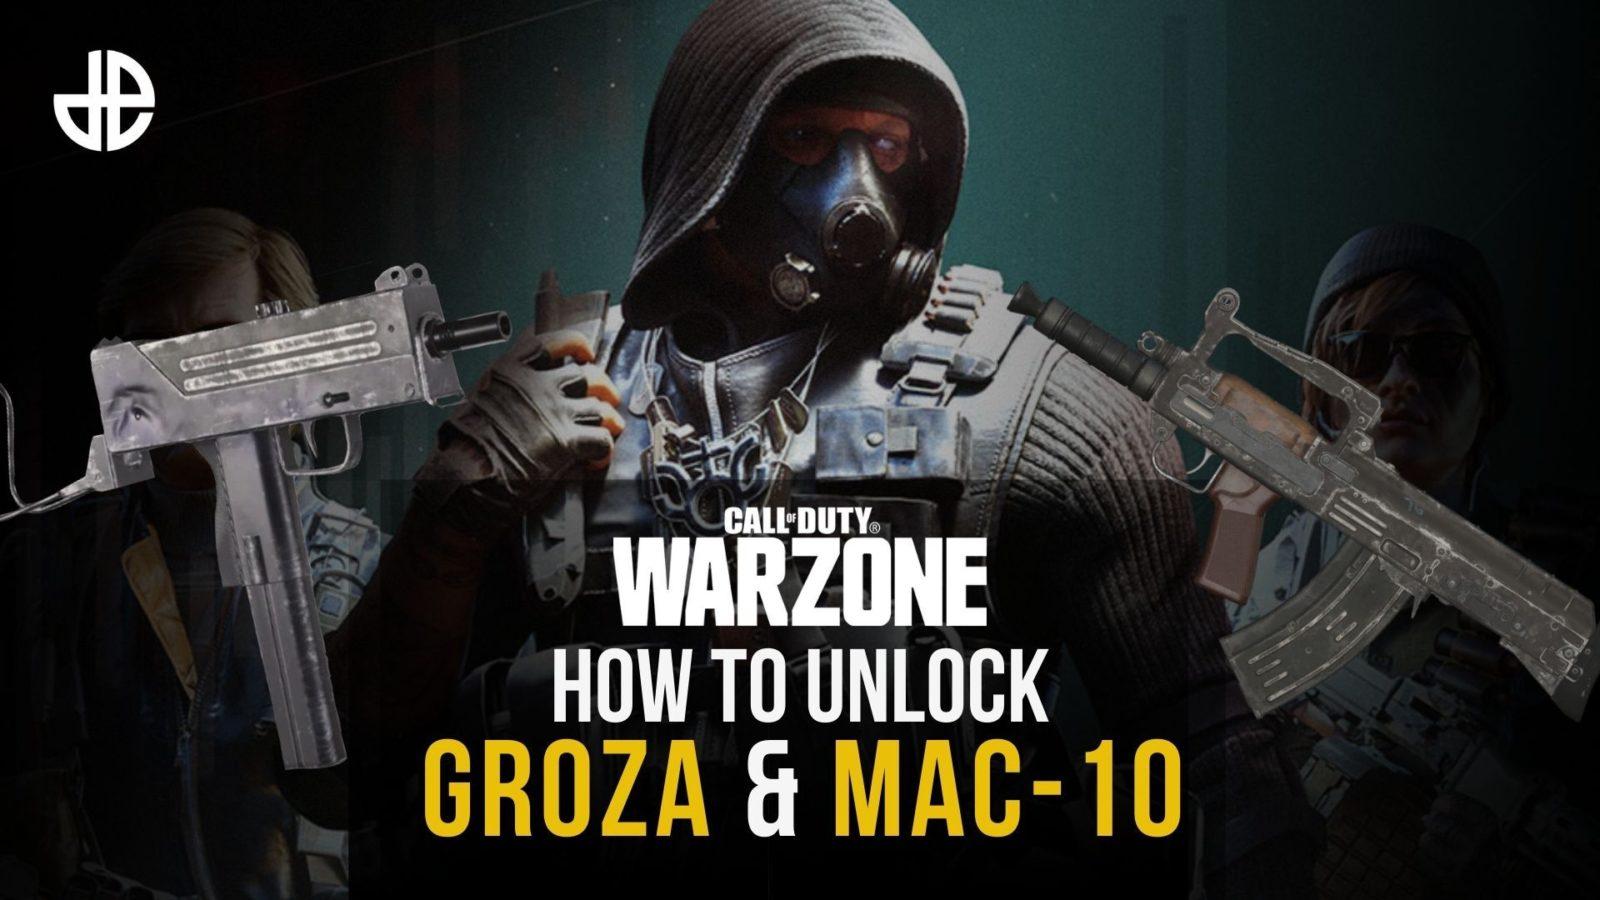 Groza and MAC-10